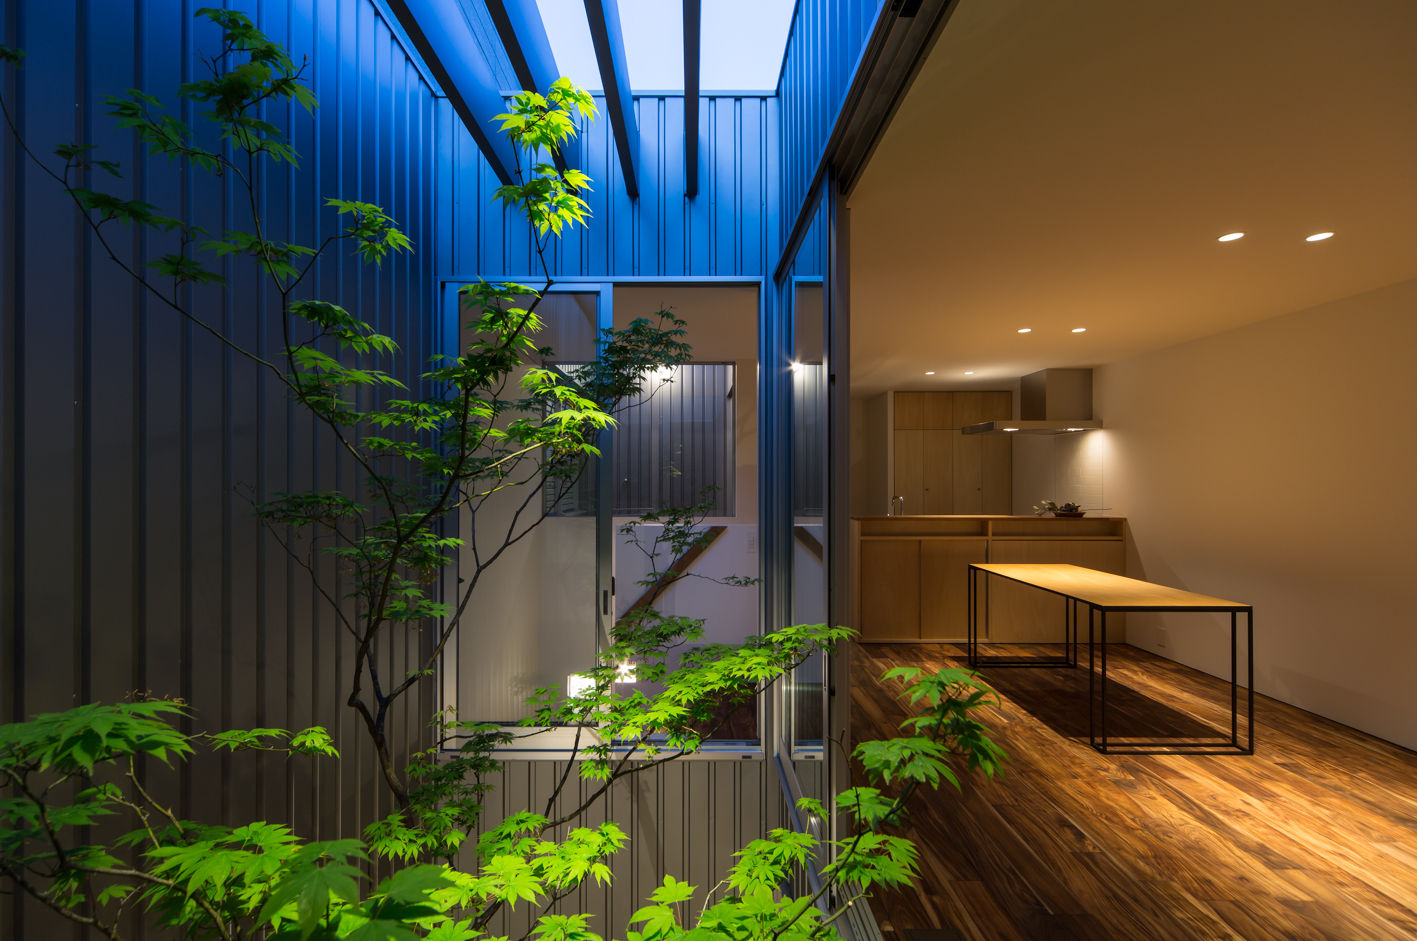 鳳の家 House in Otori, arbol arbol Jardines modernos: Ideas, imágenes y decoración